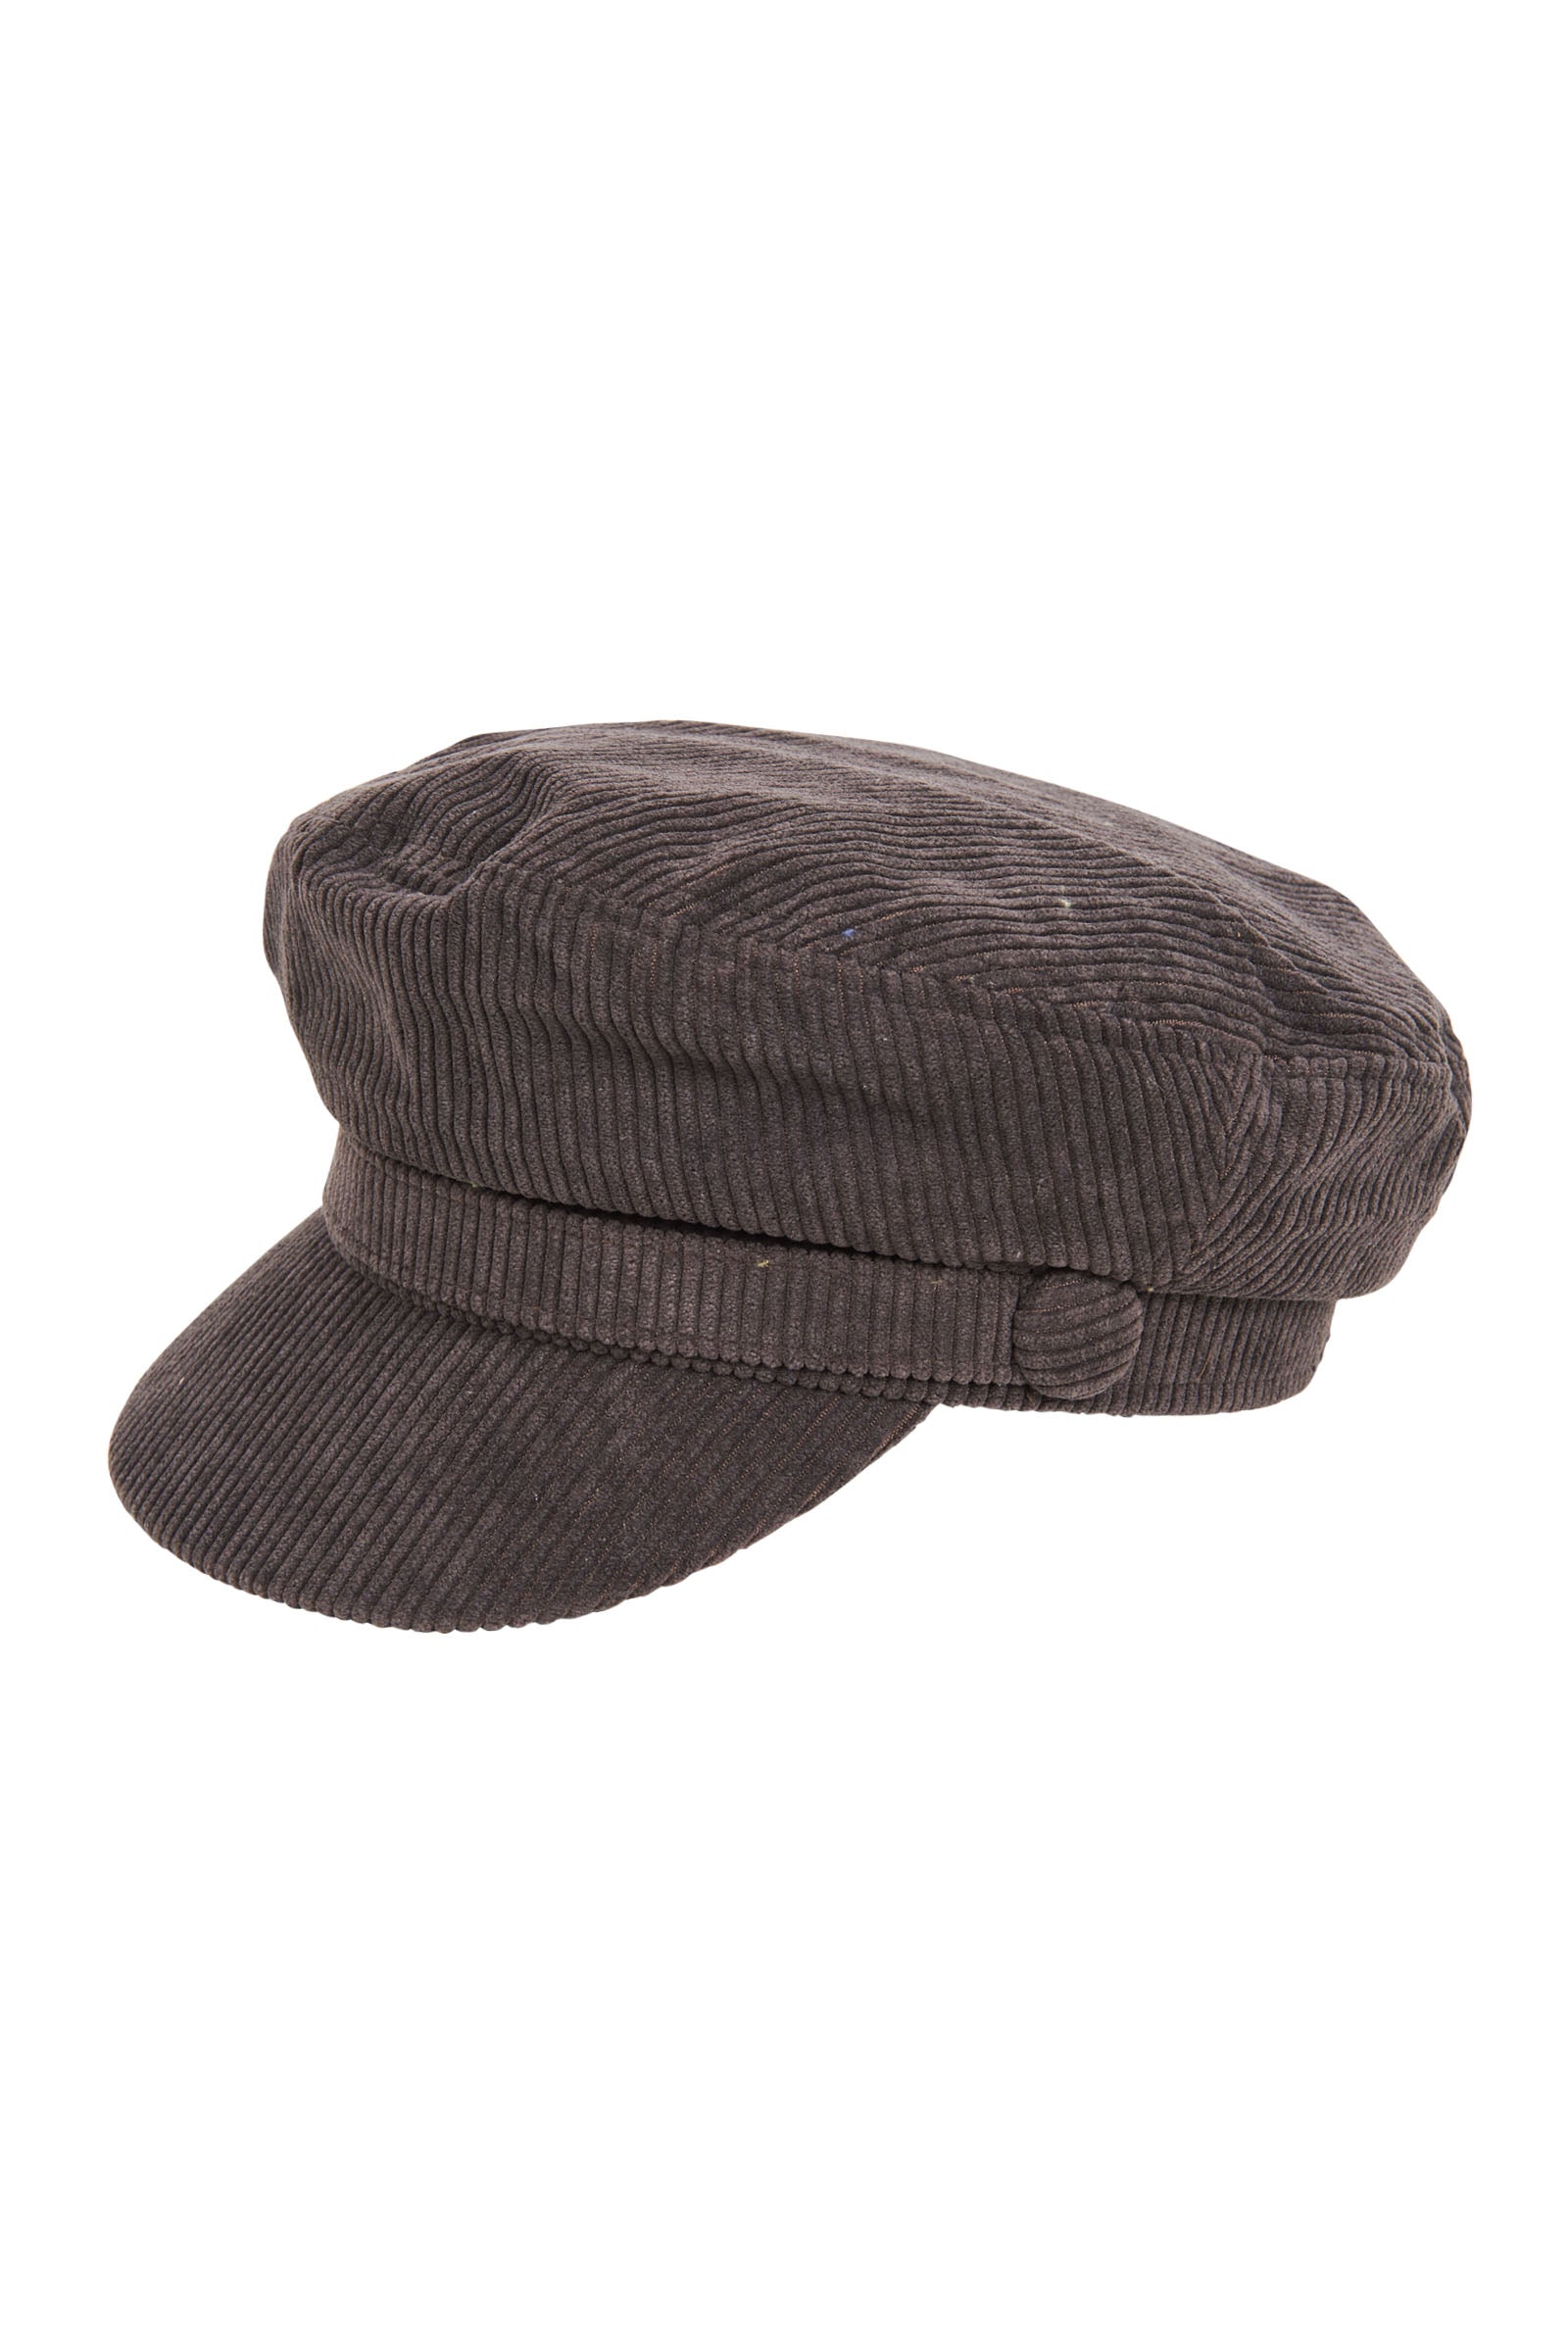 Vista Cap - Onyx - Isle of Mine Hat